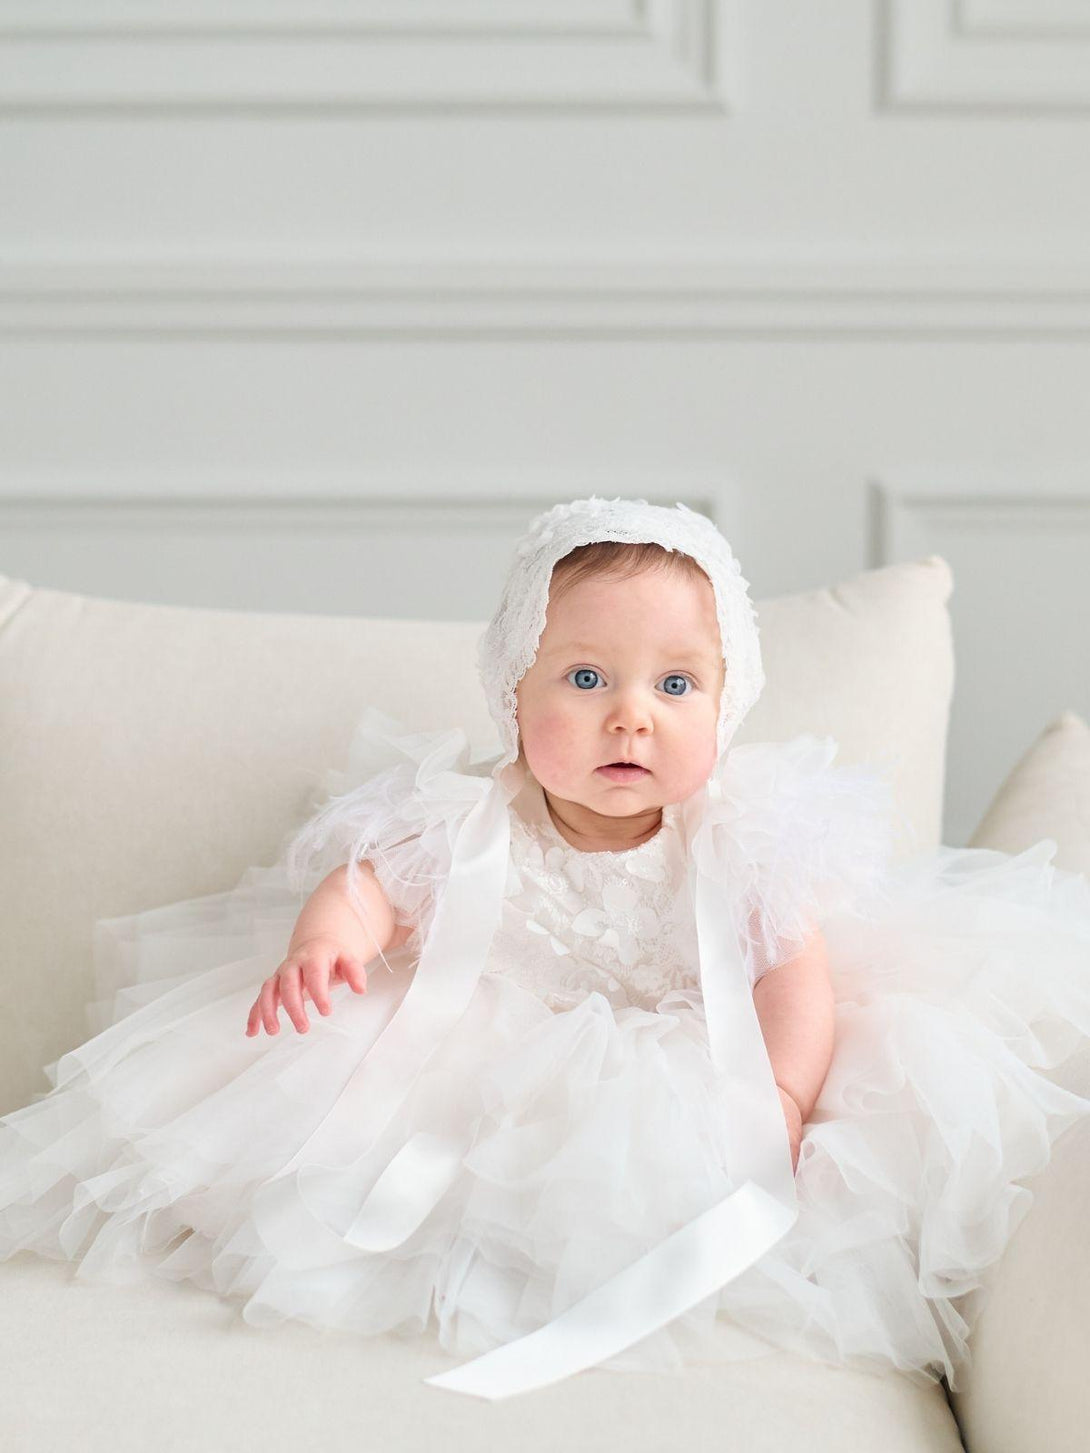 Baptism First Birthday Princess Dress in New York